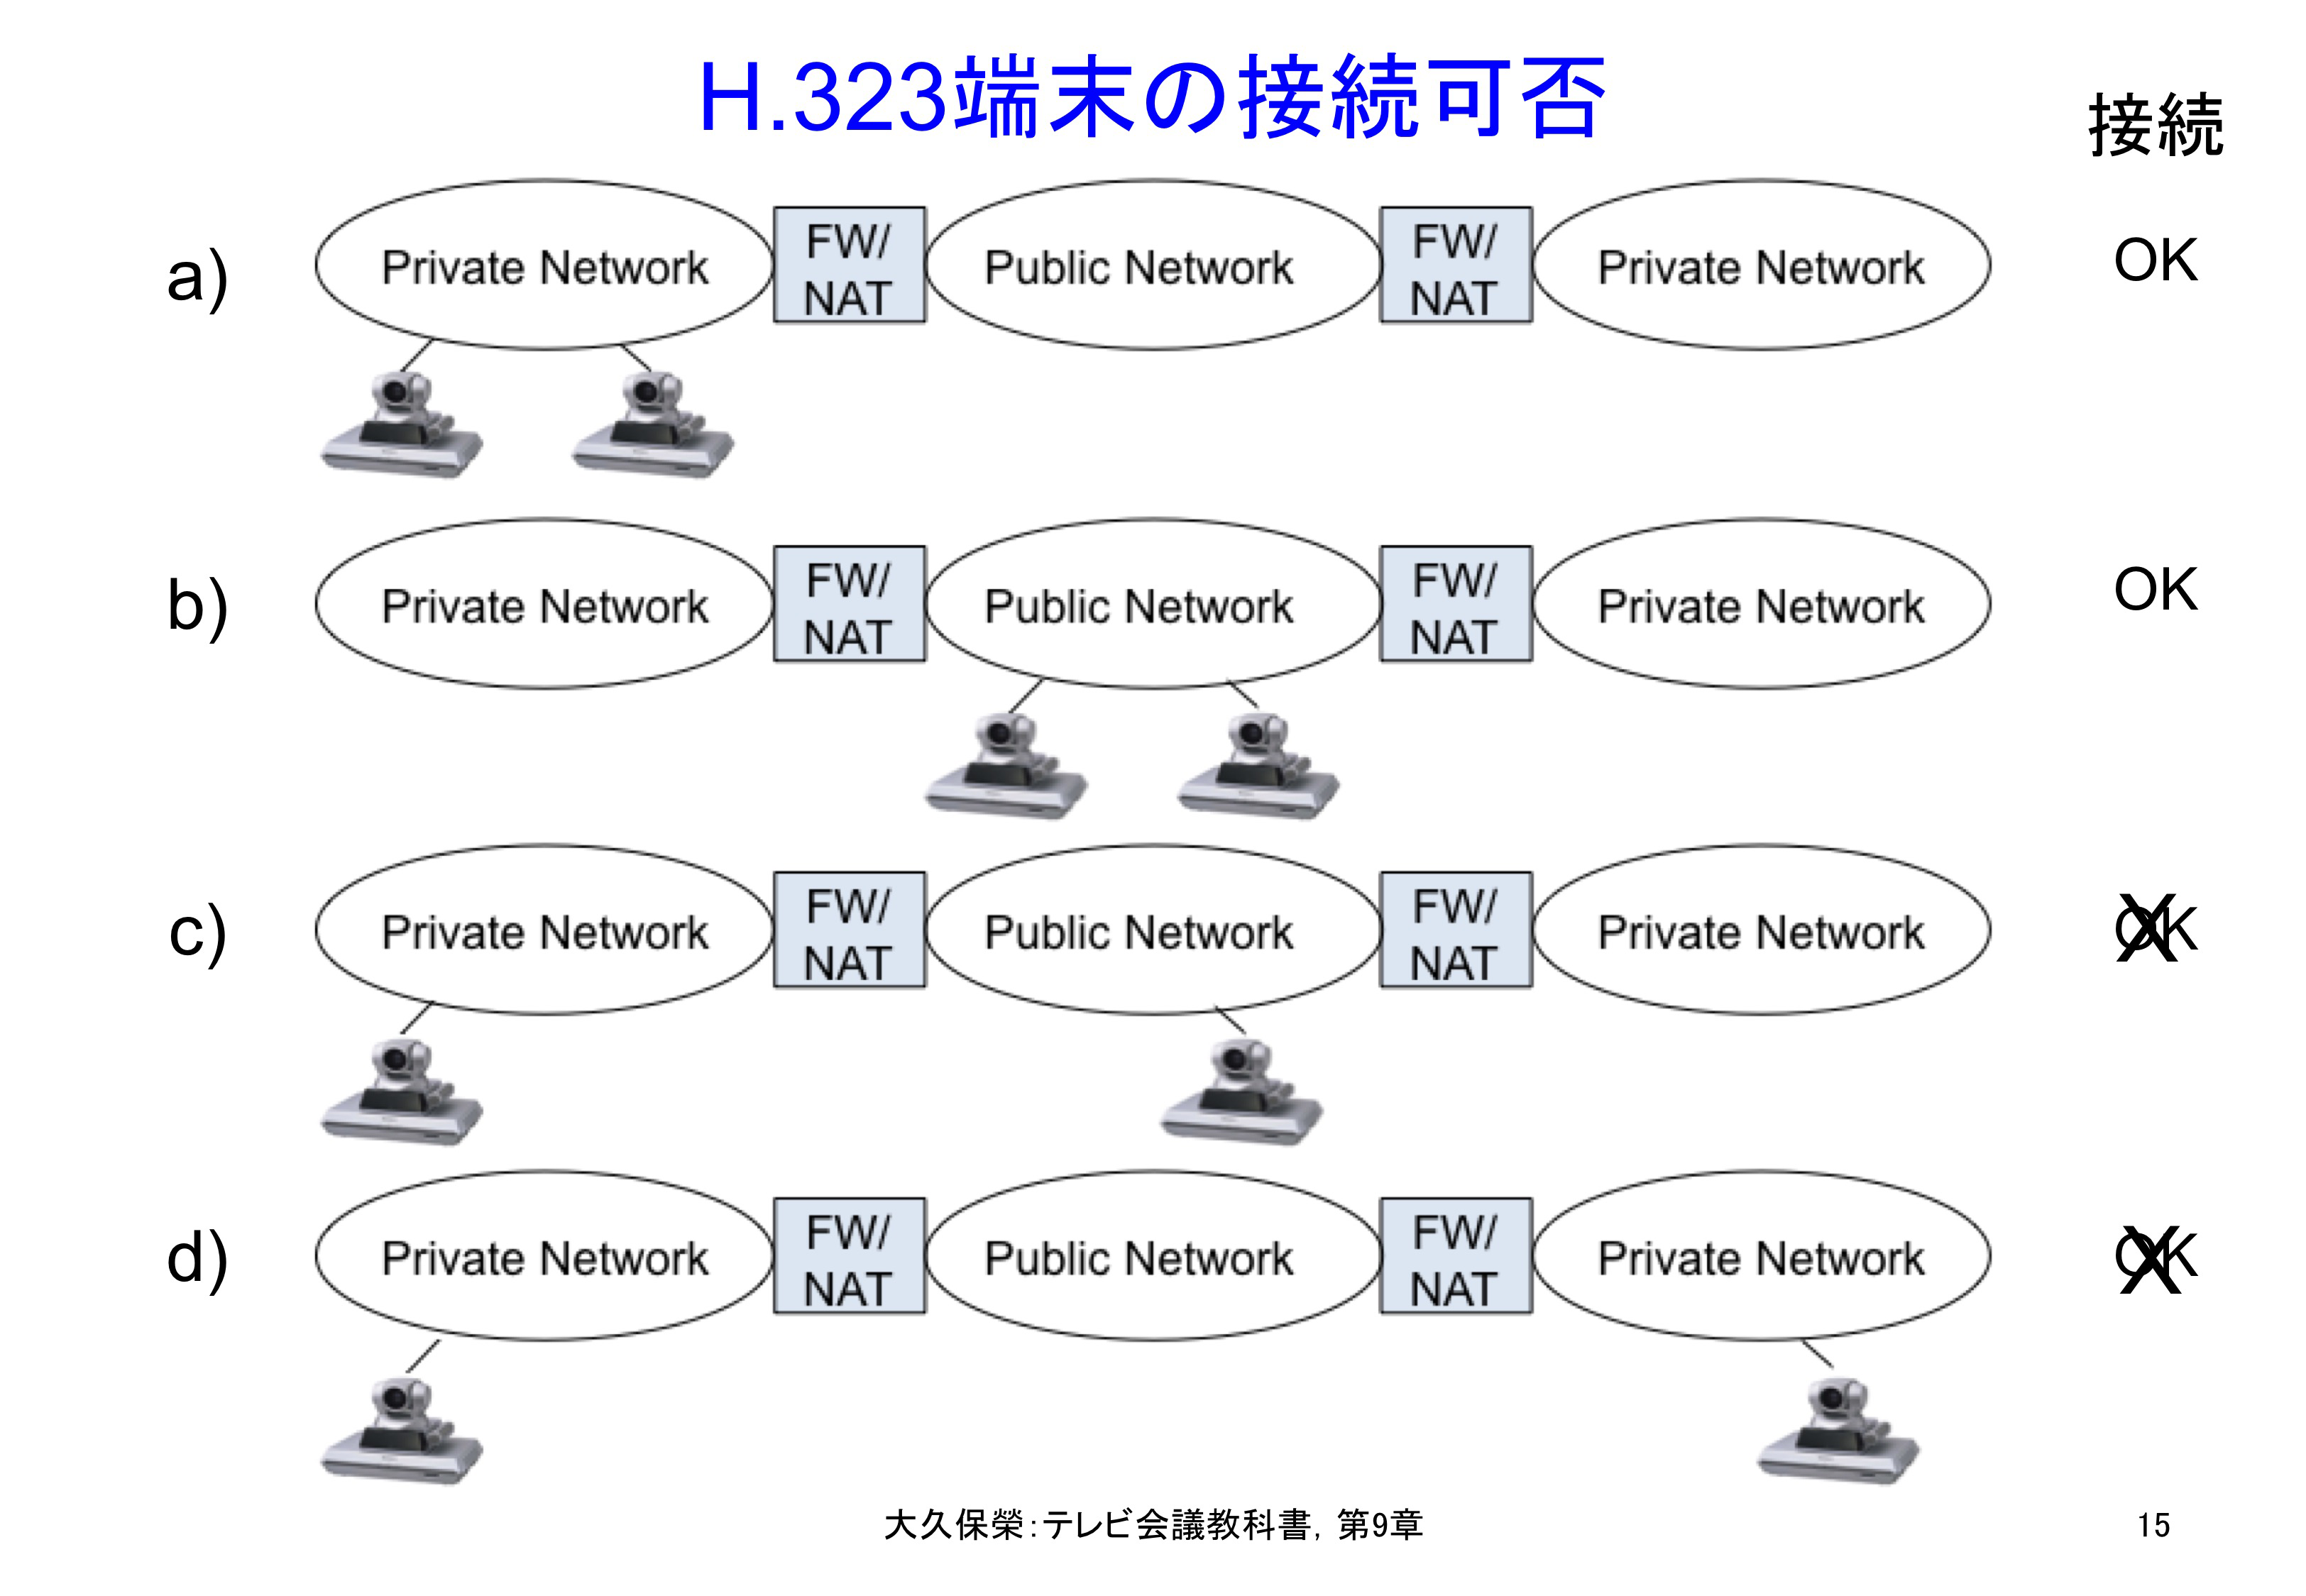 図9-15 H.323端末の接続可否